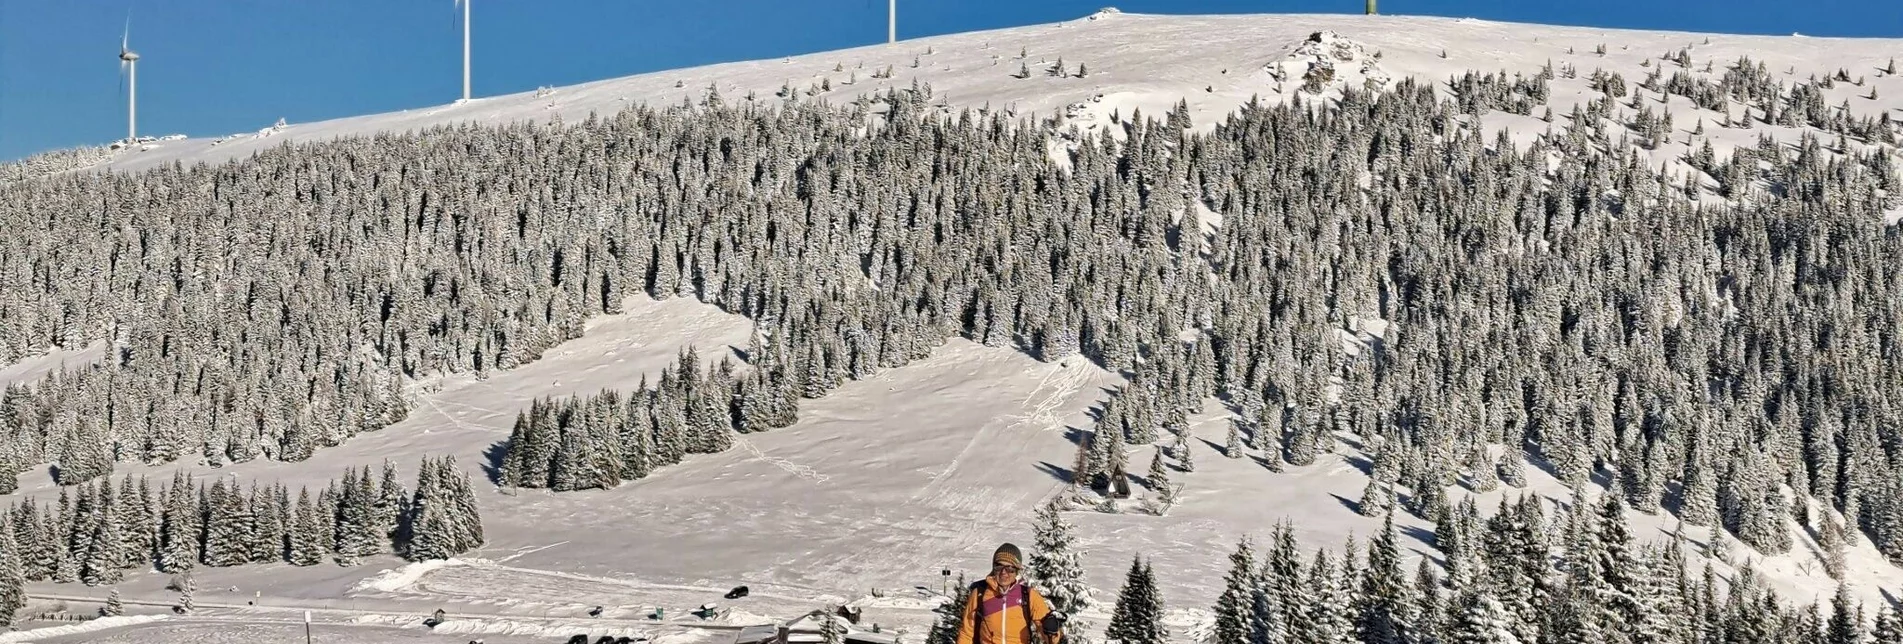 Snowshoe walking Schneeschuhwanderung Moschkogel - Touren-Impression #1 | © Weges OG